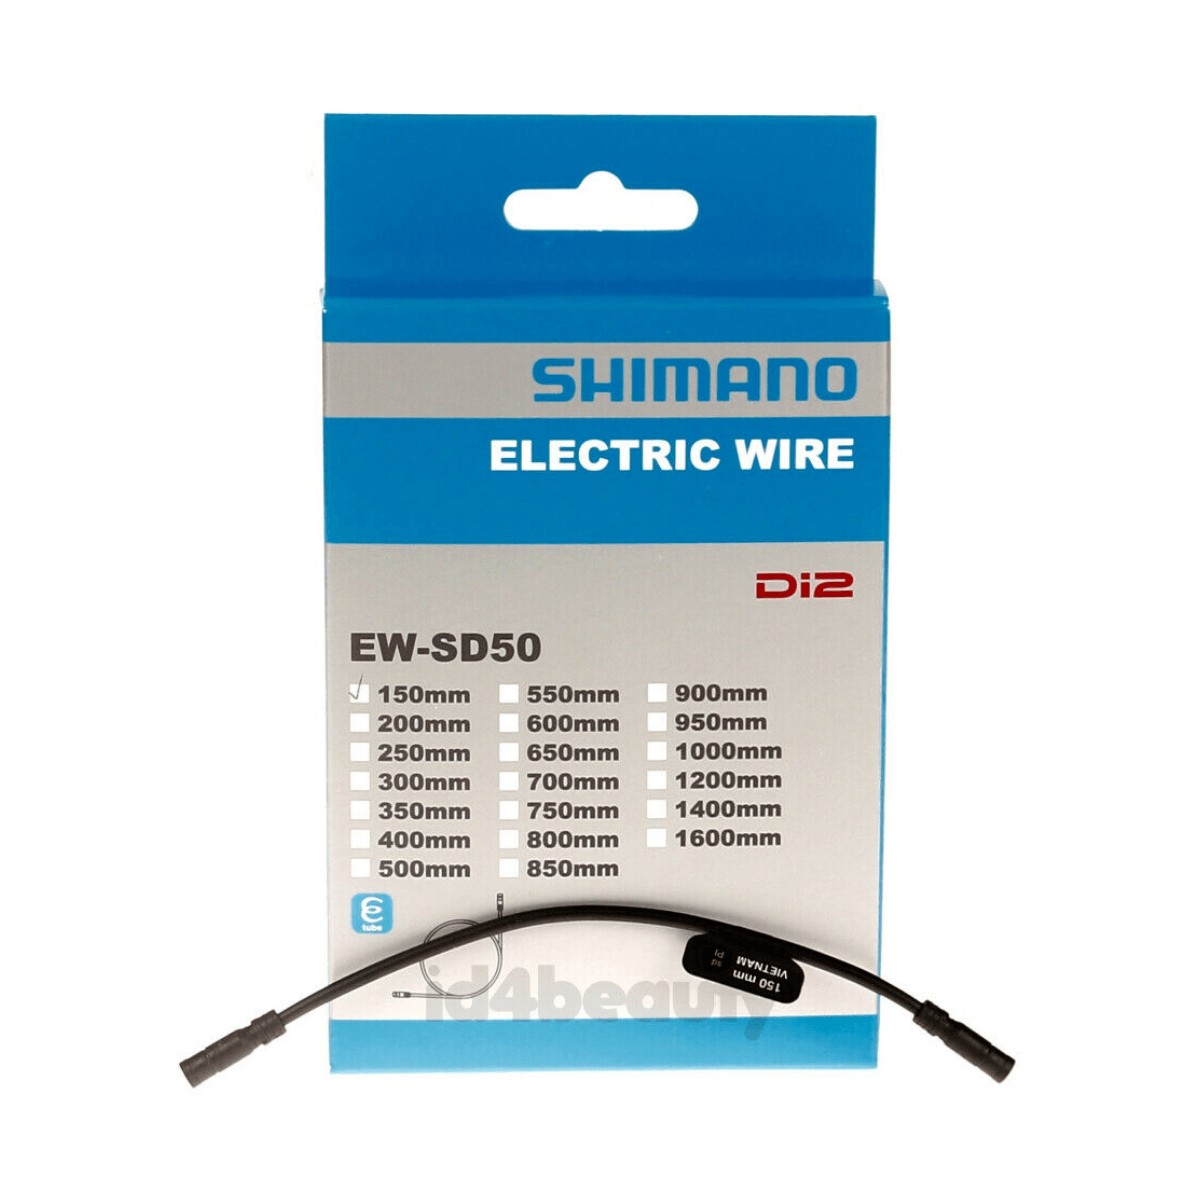 Komponenten Kabel günstig Kaufen-Shimano DI2 EW-SD50 150mm Kabel. Shimano DI2 EW-SD50 150mm Kabel <![CDATA[Shimano DI2 EW-SD50 150mm Kabel
 Erforderlich für DI2-Komponentenbaugruppen.]]>. 